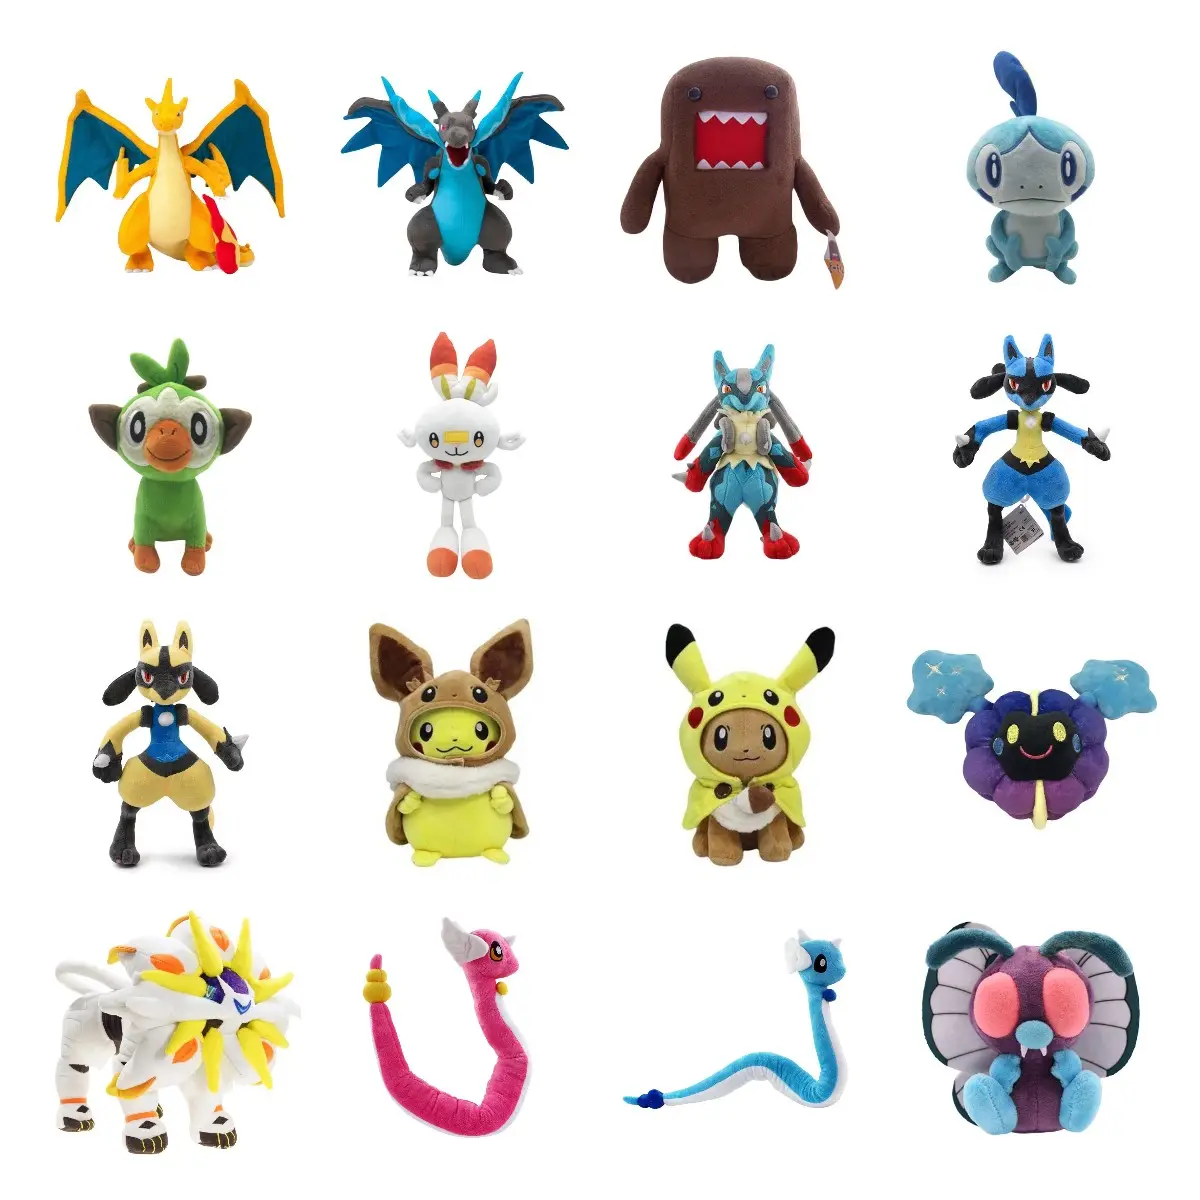 56 style poekmoned plush collection toys stuffed animals plush pokemon